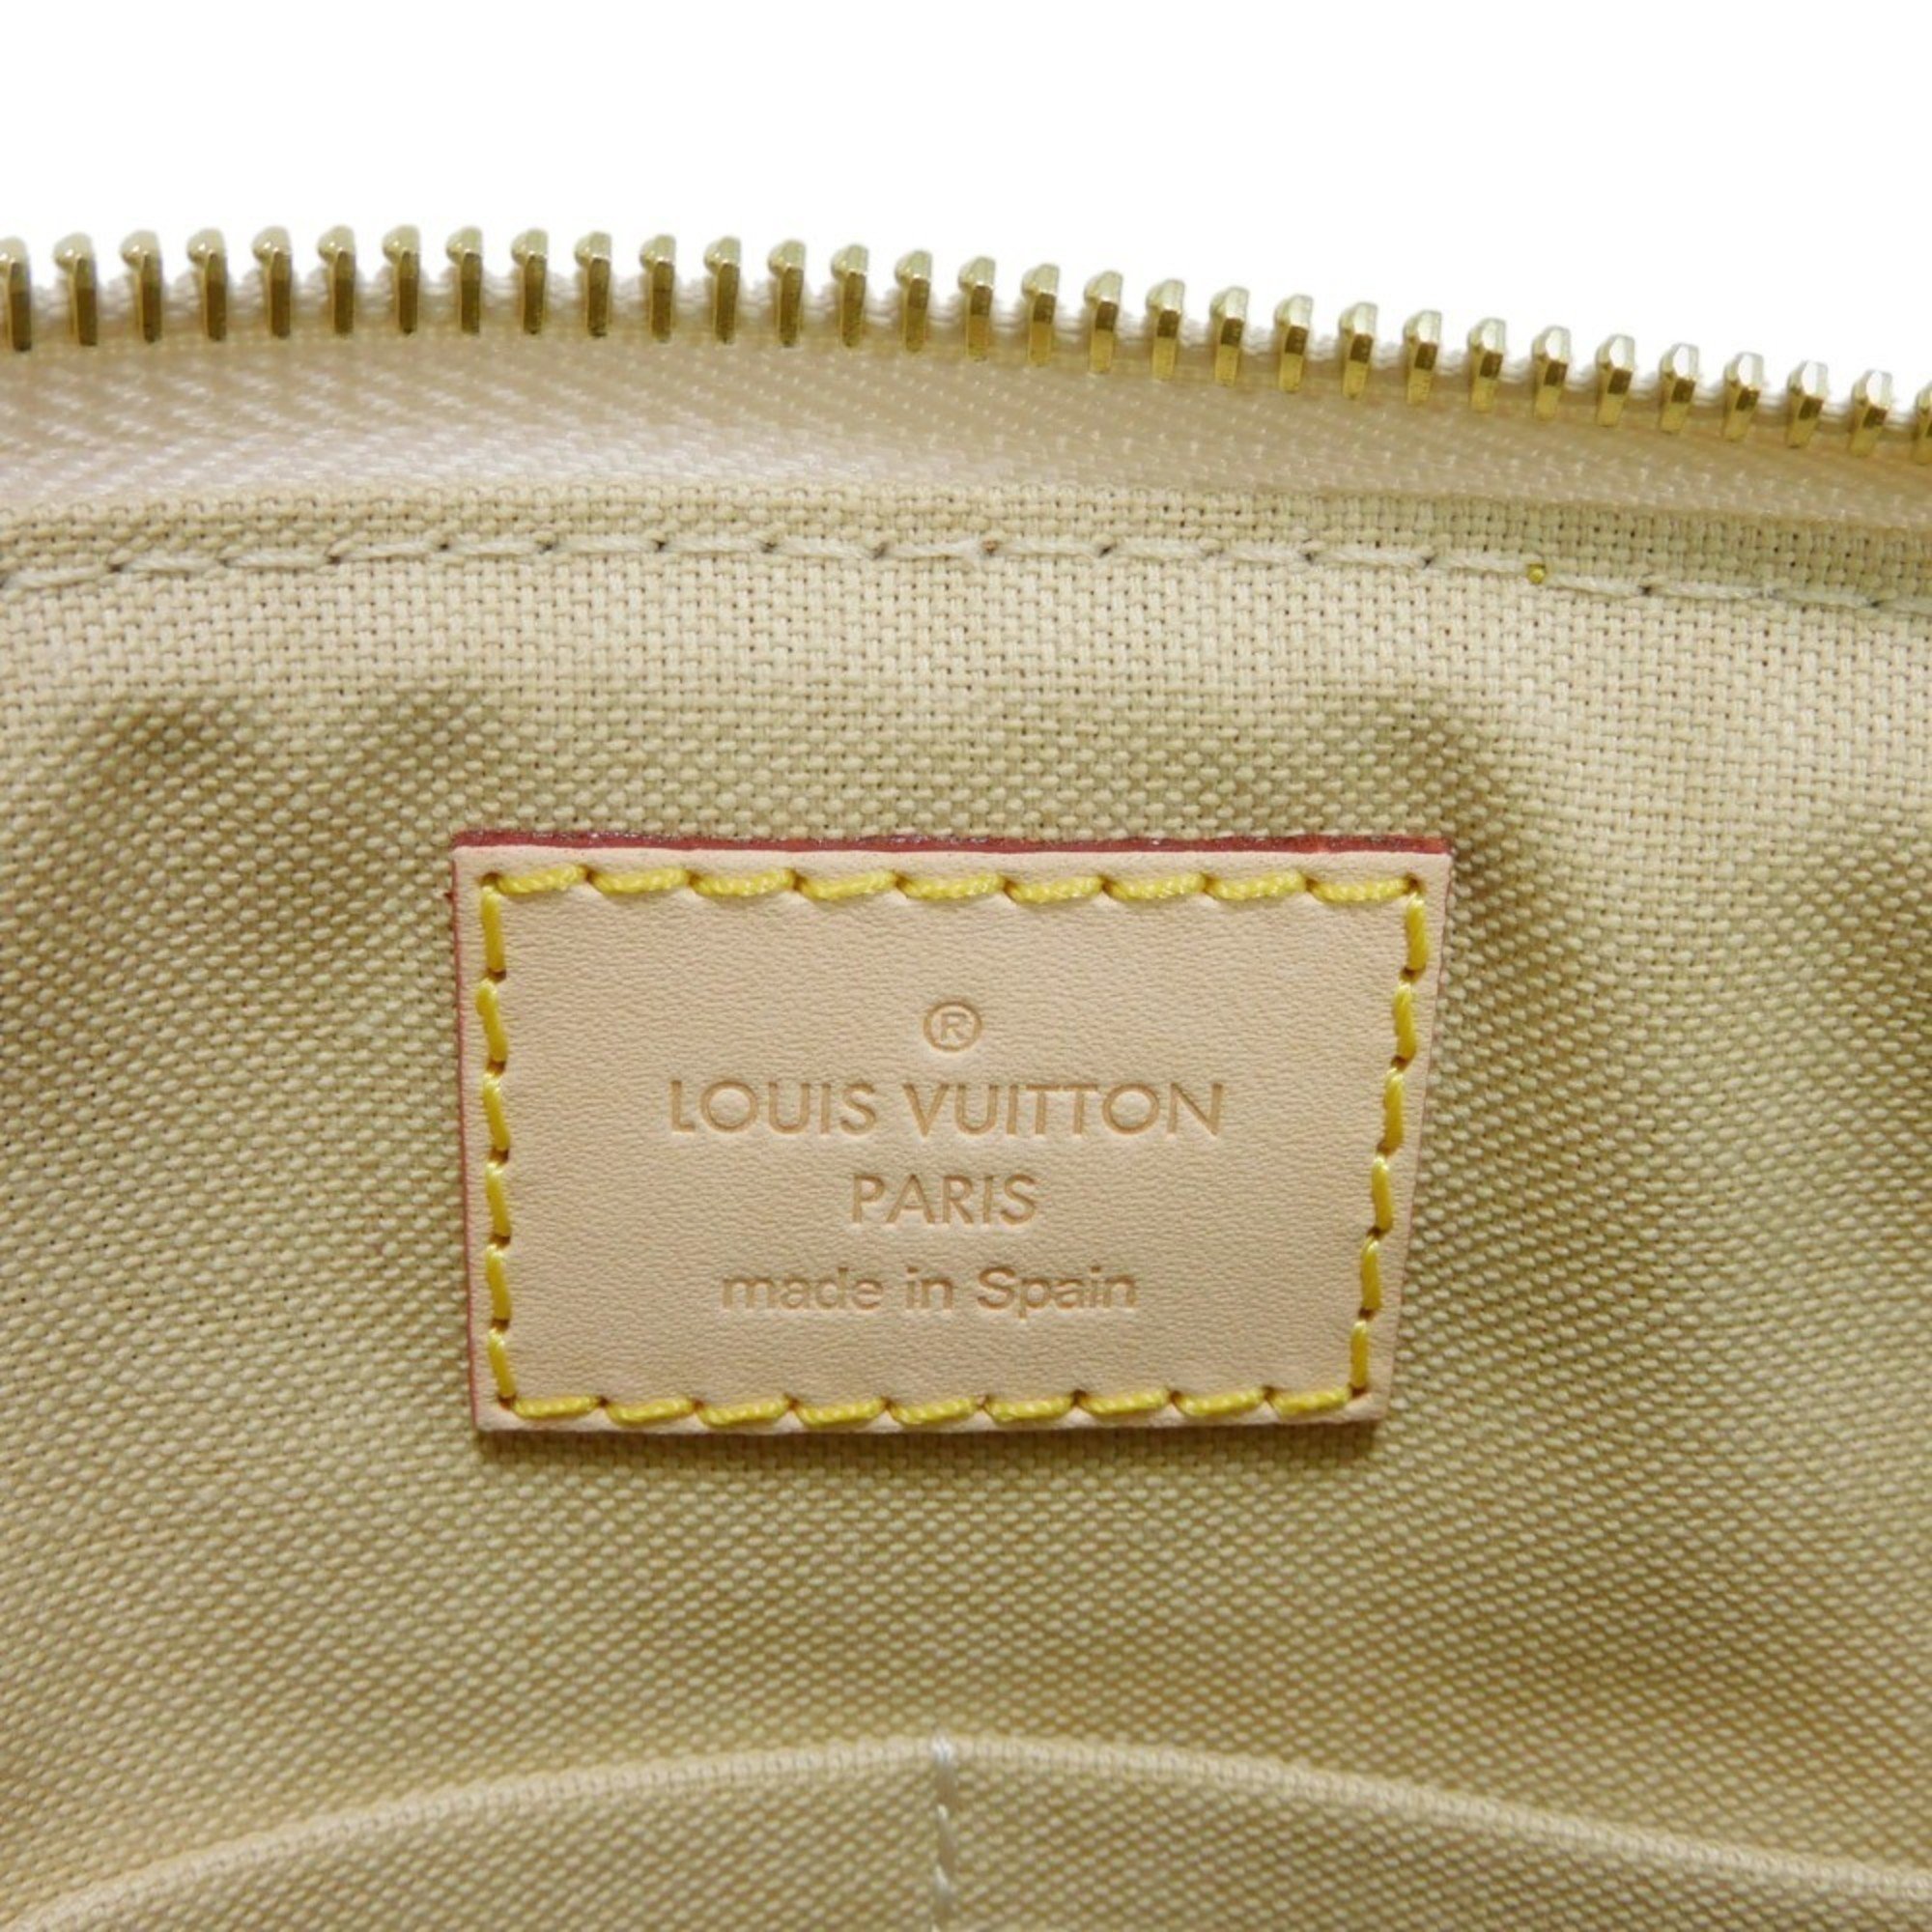 Louis Vuitton Siracusa PM Shoulder Bag Pleated Gold Crossbody Damier Azur Ivory N41113 Women's